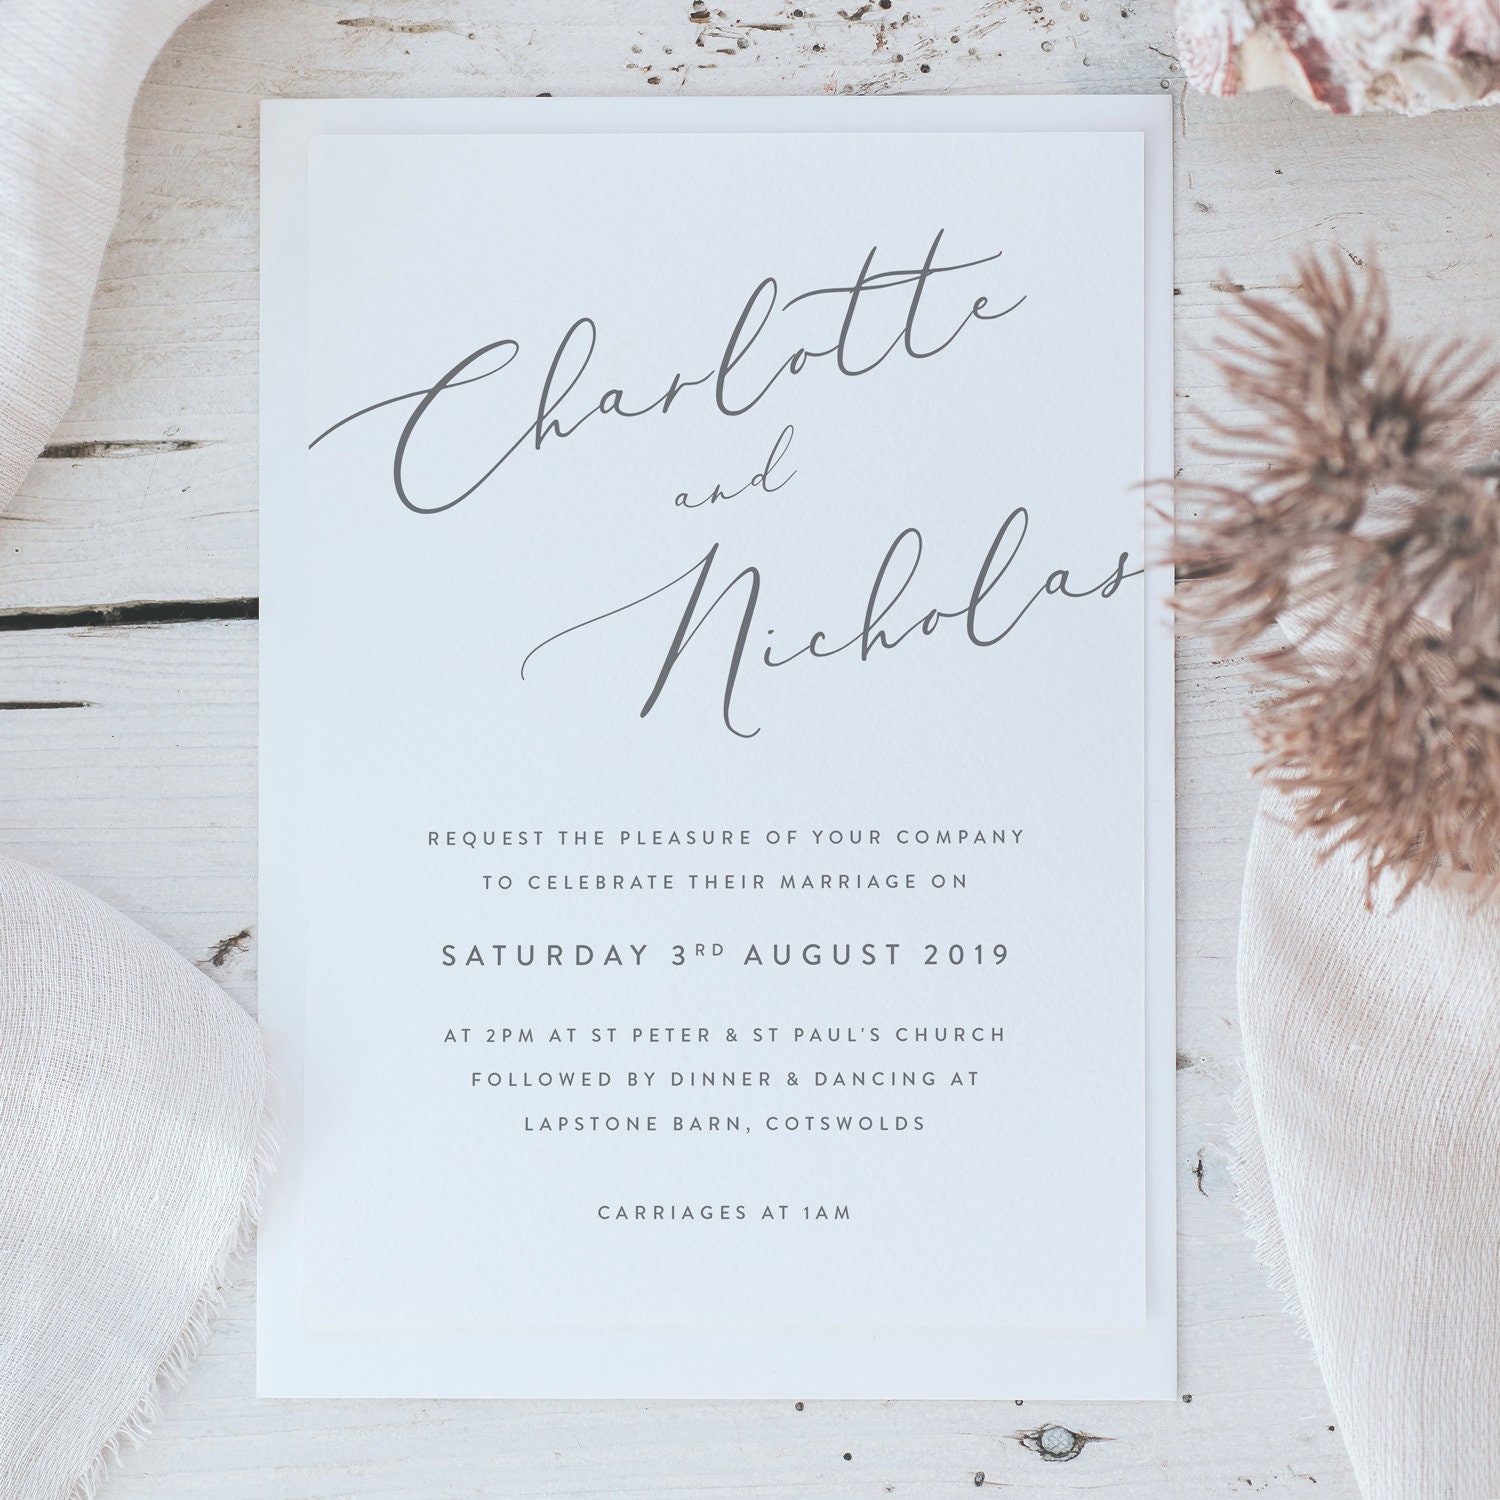 Simple & Elegant Wedding Invitations - Includes Envelopes Printed Personalised Invitation